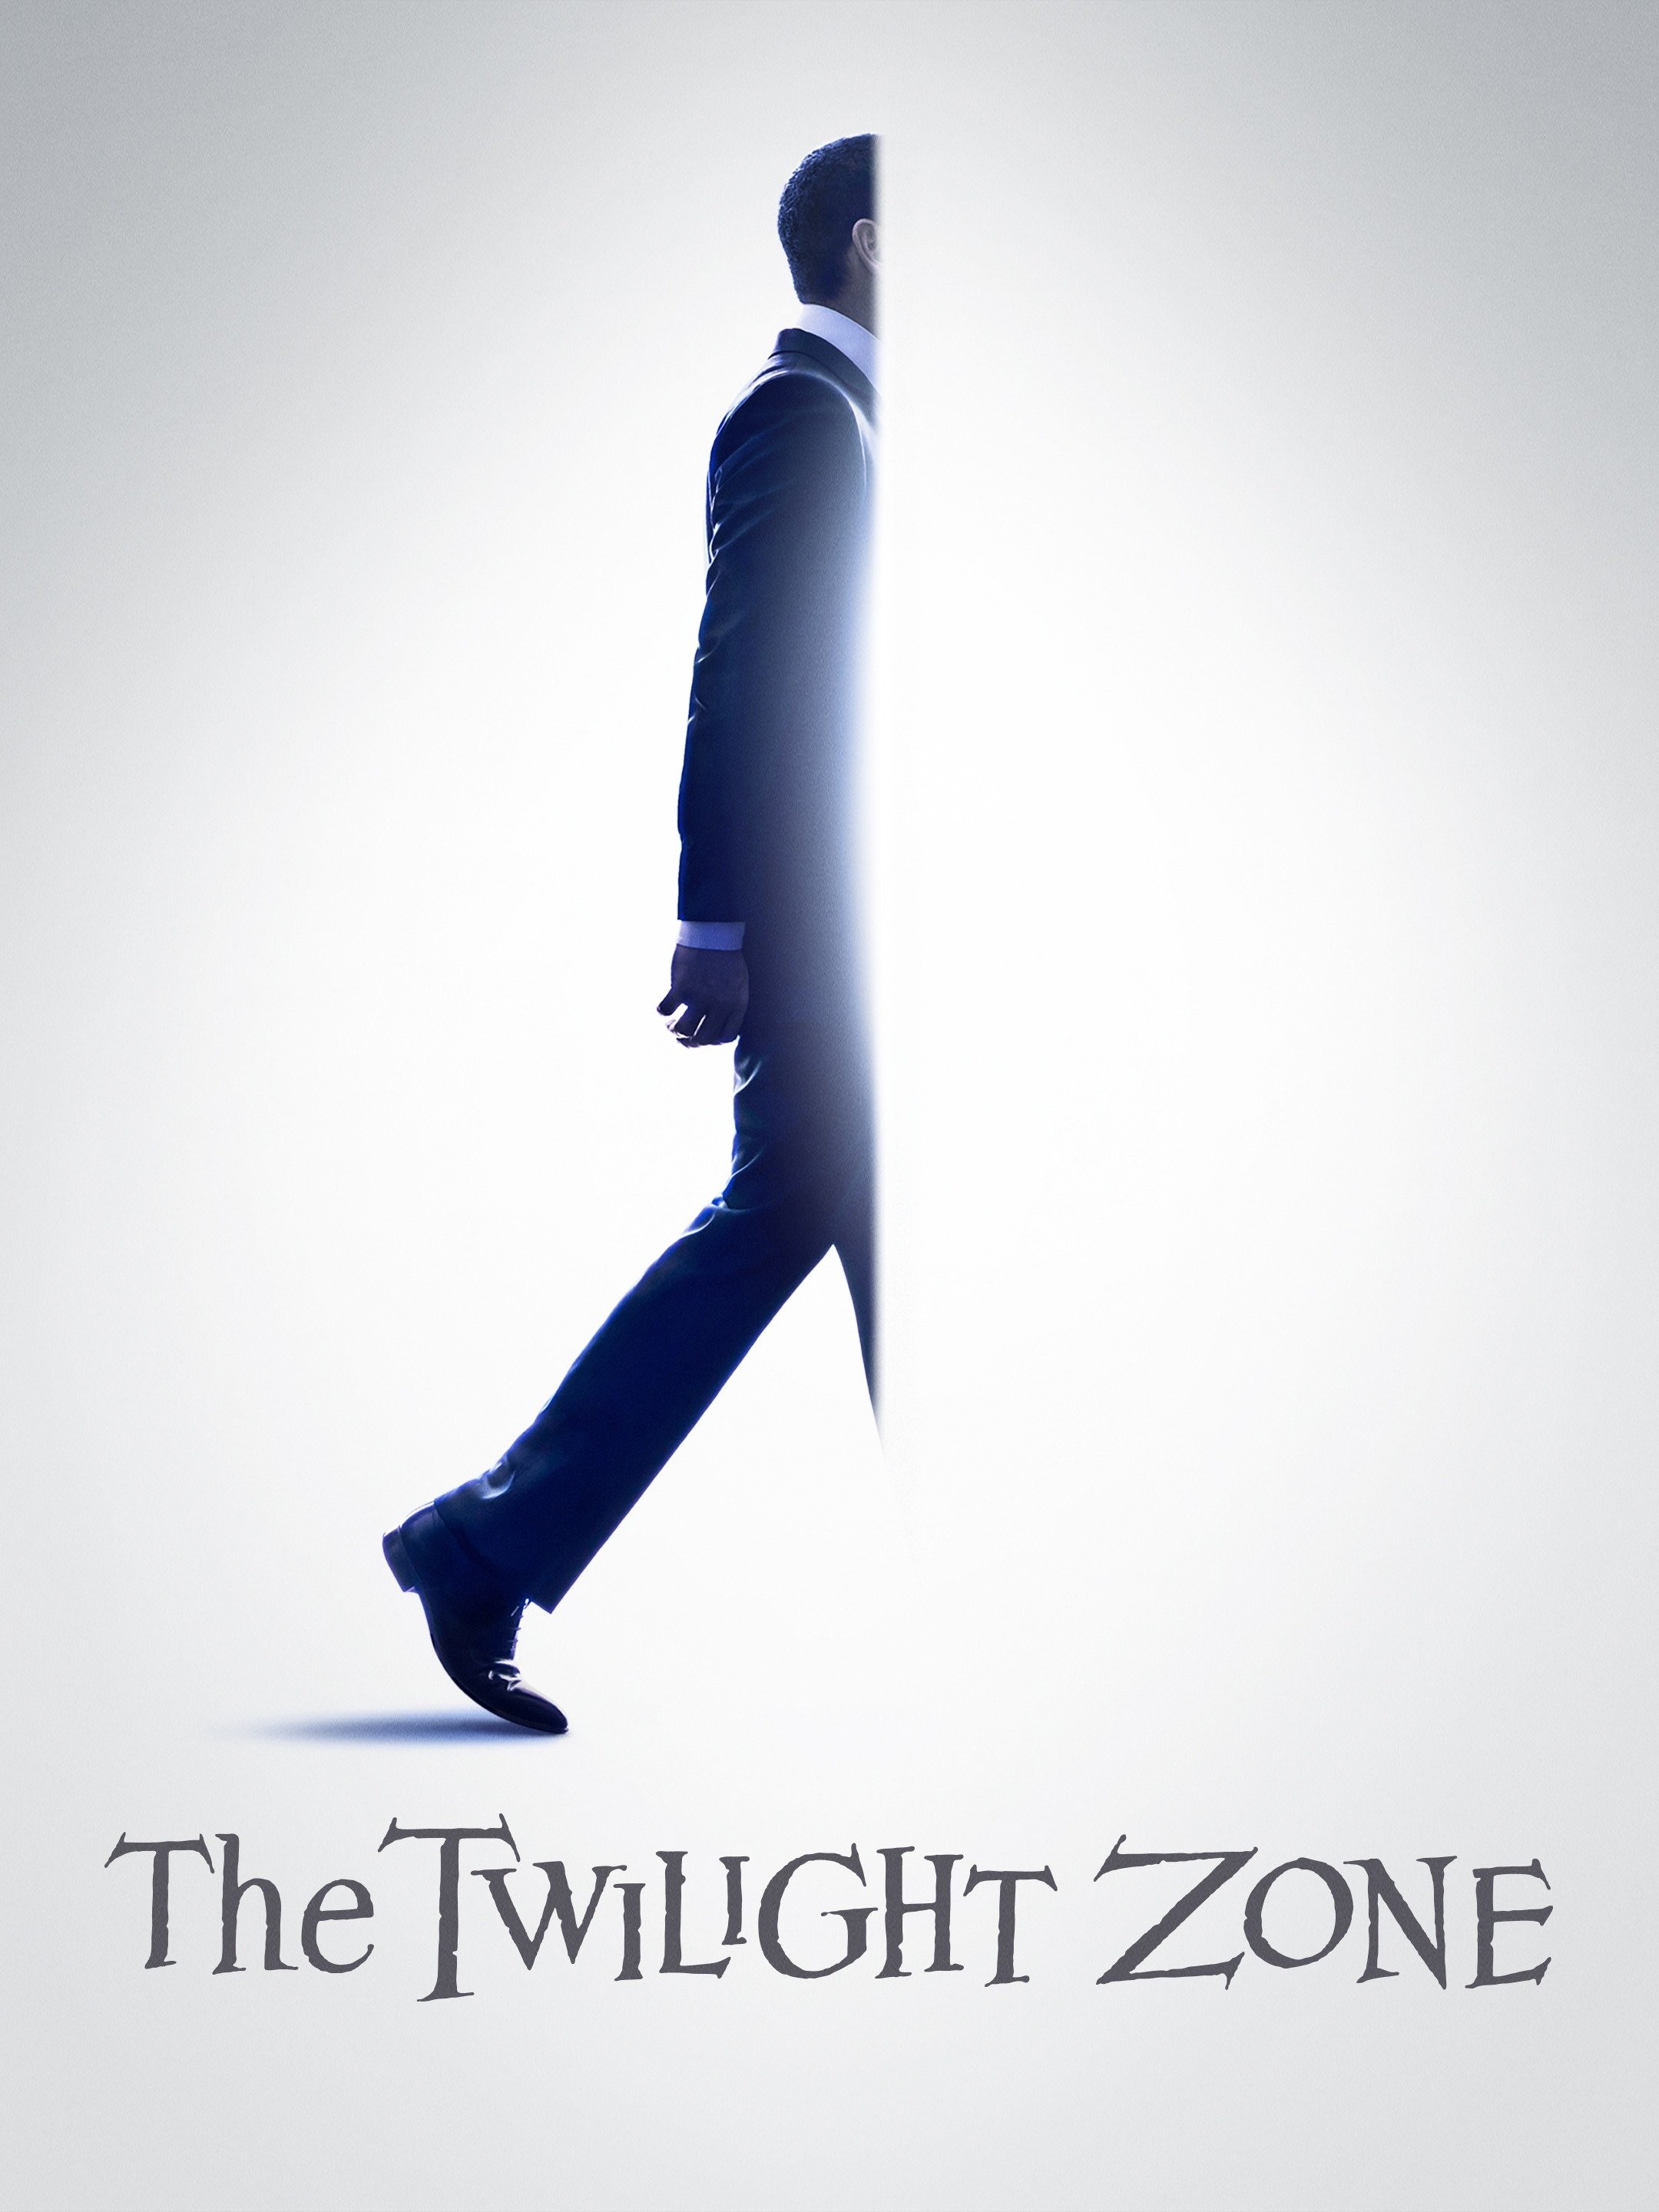 Twilight Zone' movie finds screenwriter (EXCLUSIVE)